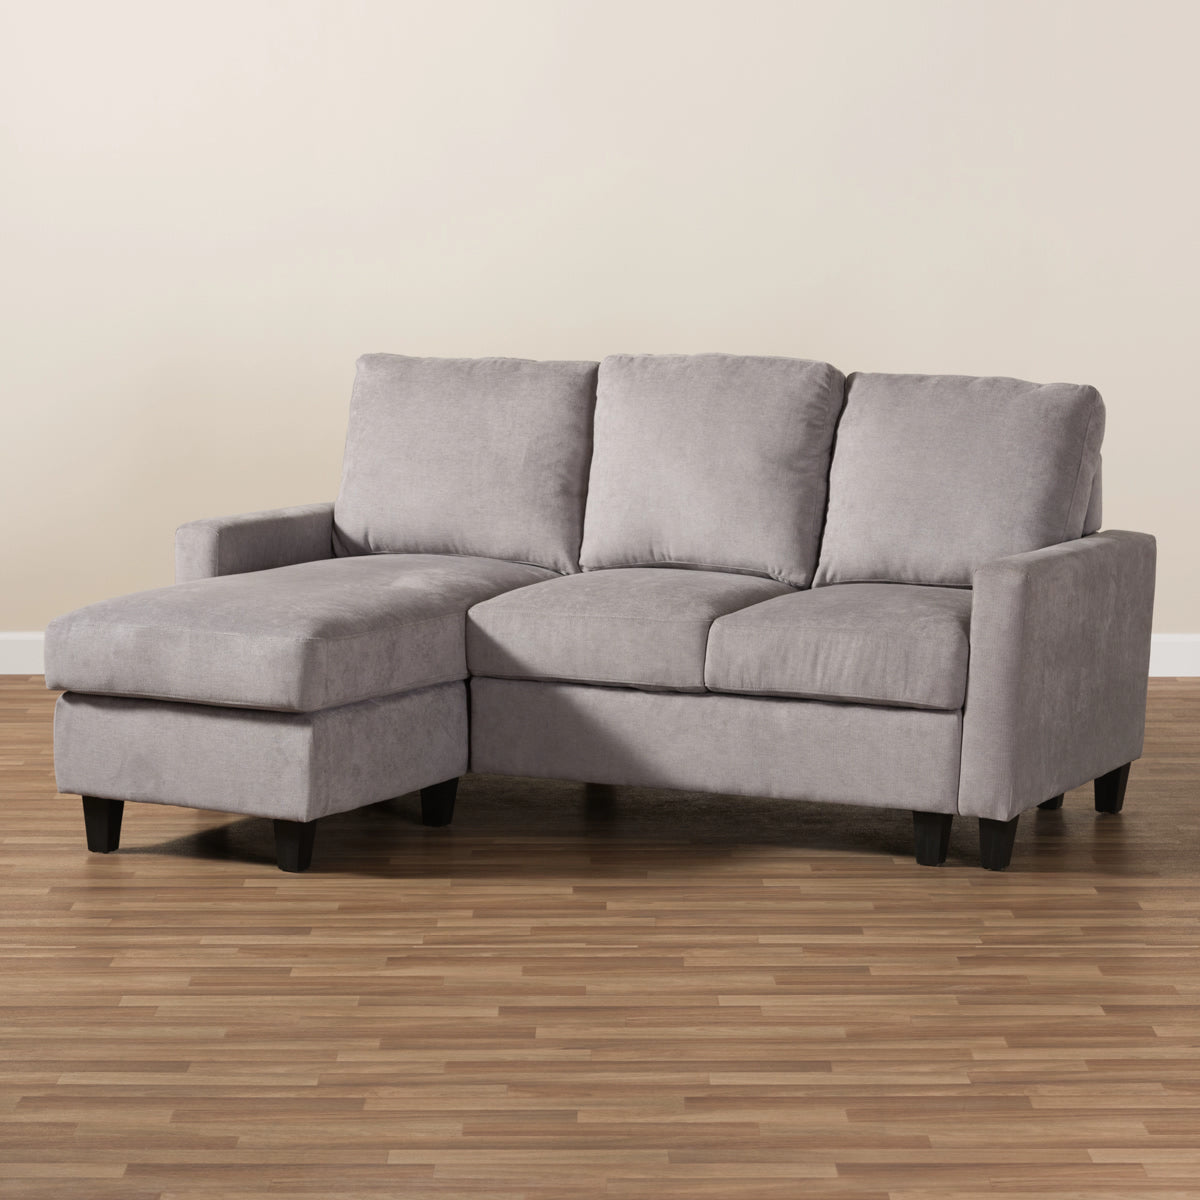 Baxton Studio Greyson Modern And Contemporary Light Grey Fabric Upholstered Reversible Sectional Sofa Baxton Studio-sofas-Minimal And Modern - 5